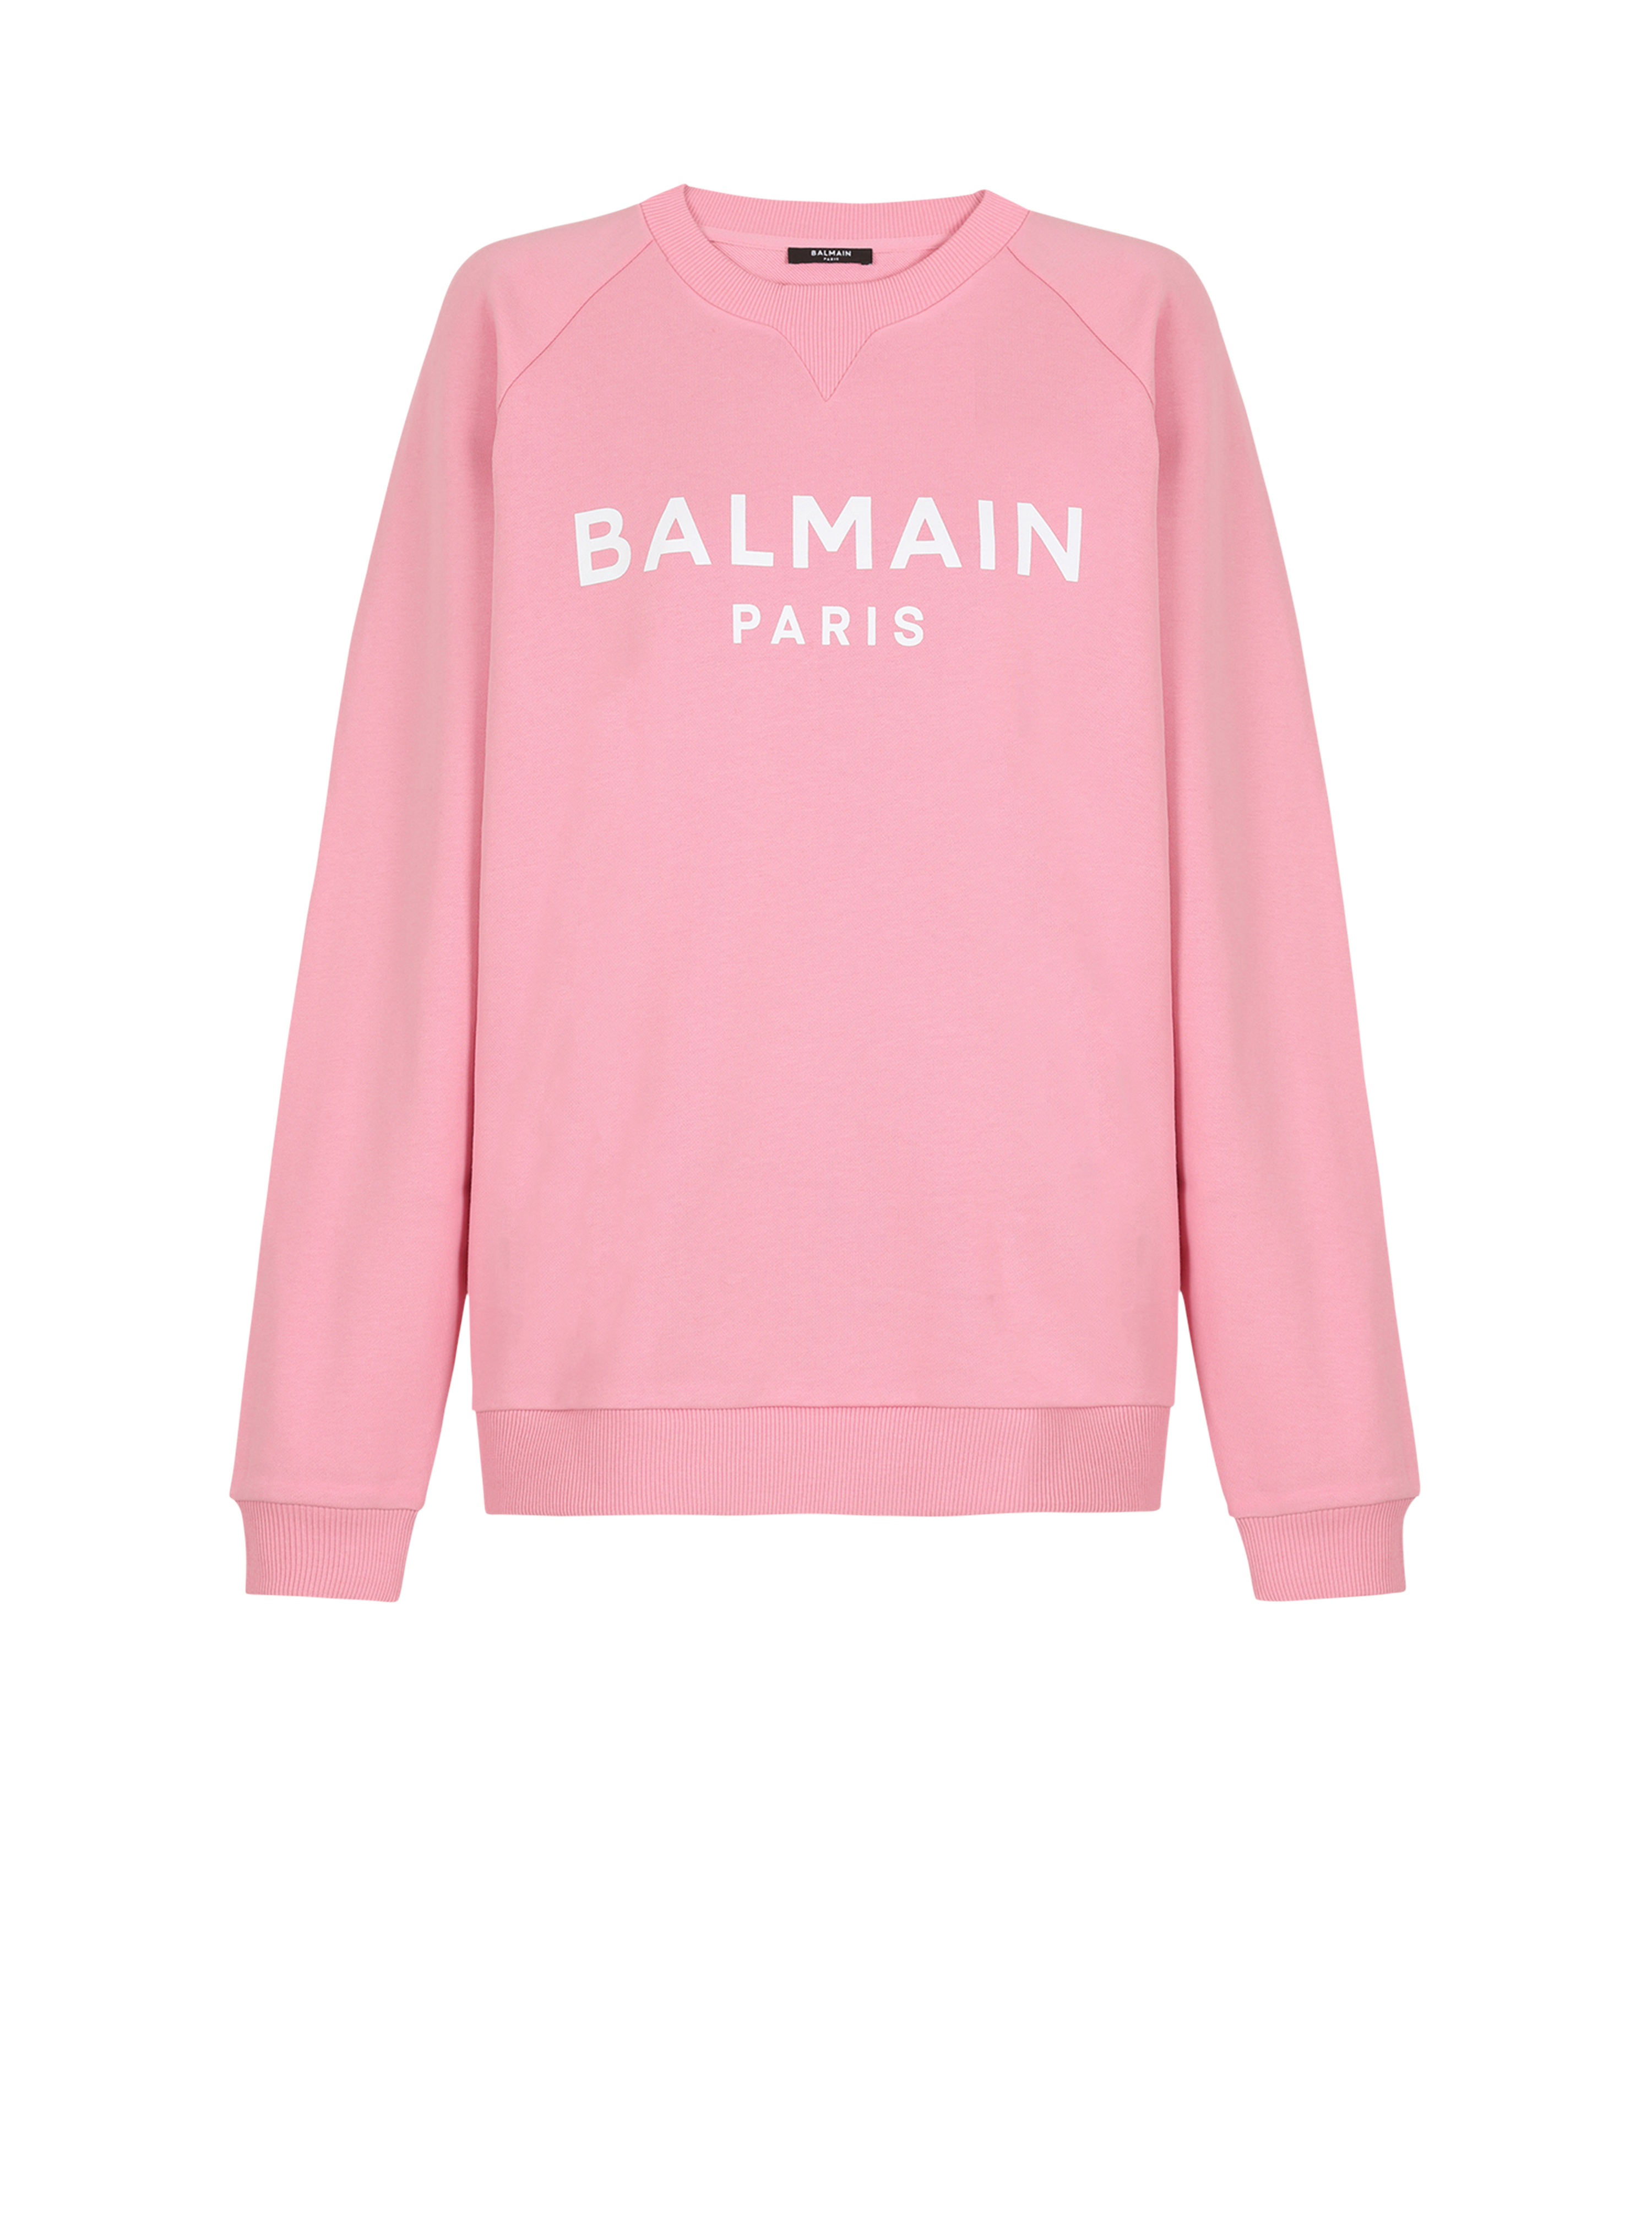 Eco-designed cotton sweatshirt with Balmain logo print, pink